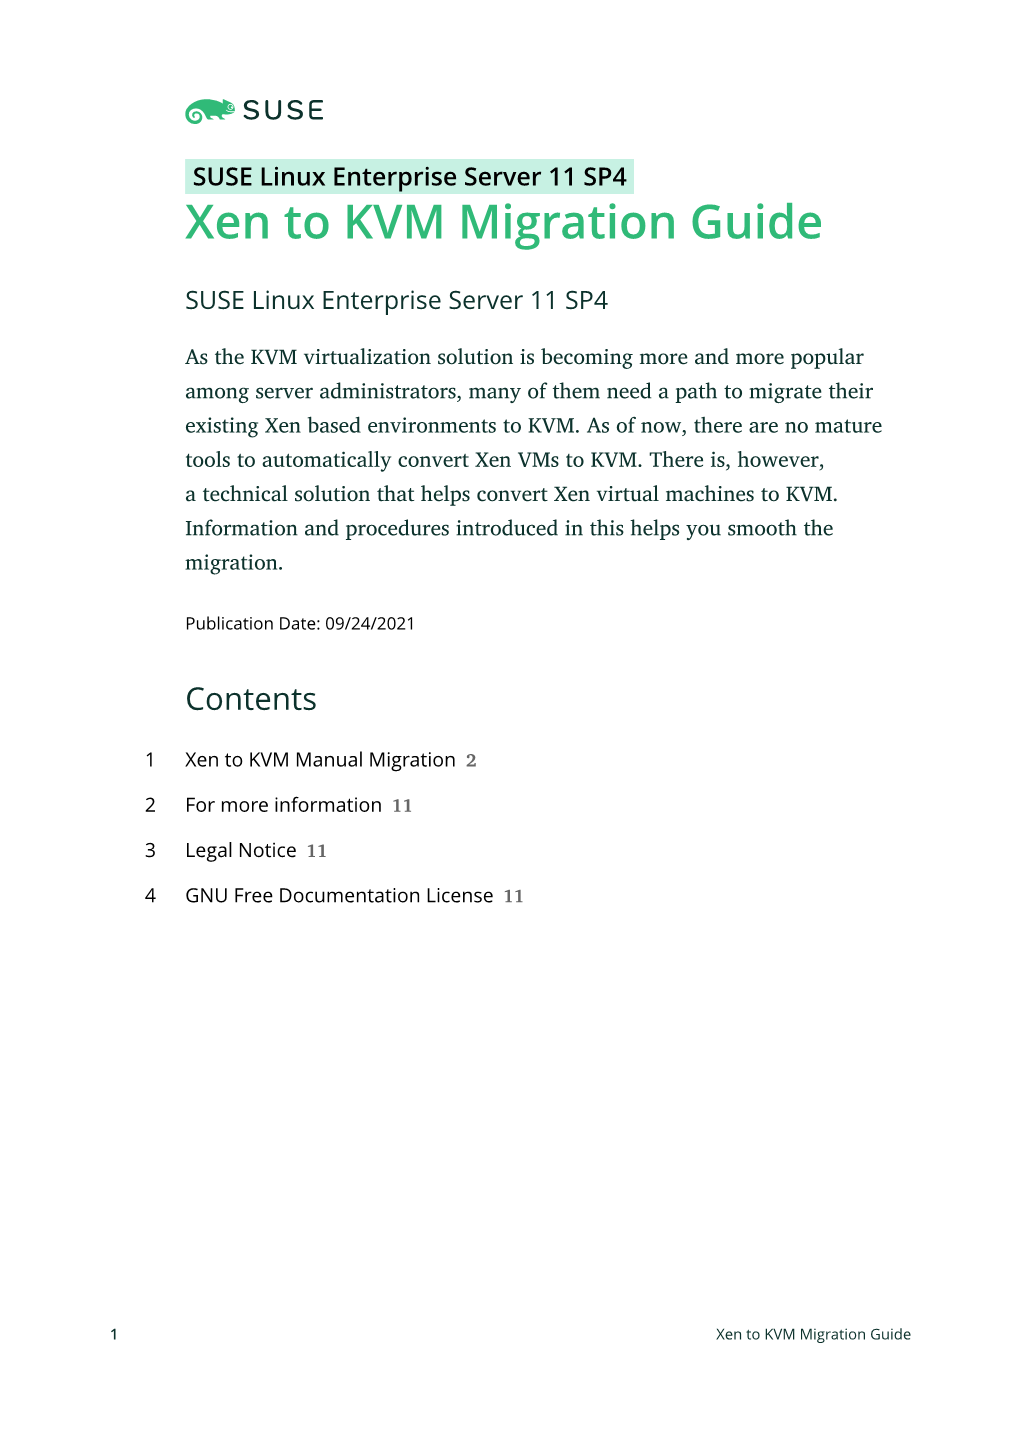 Xen to KVM Migration Guide